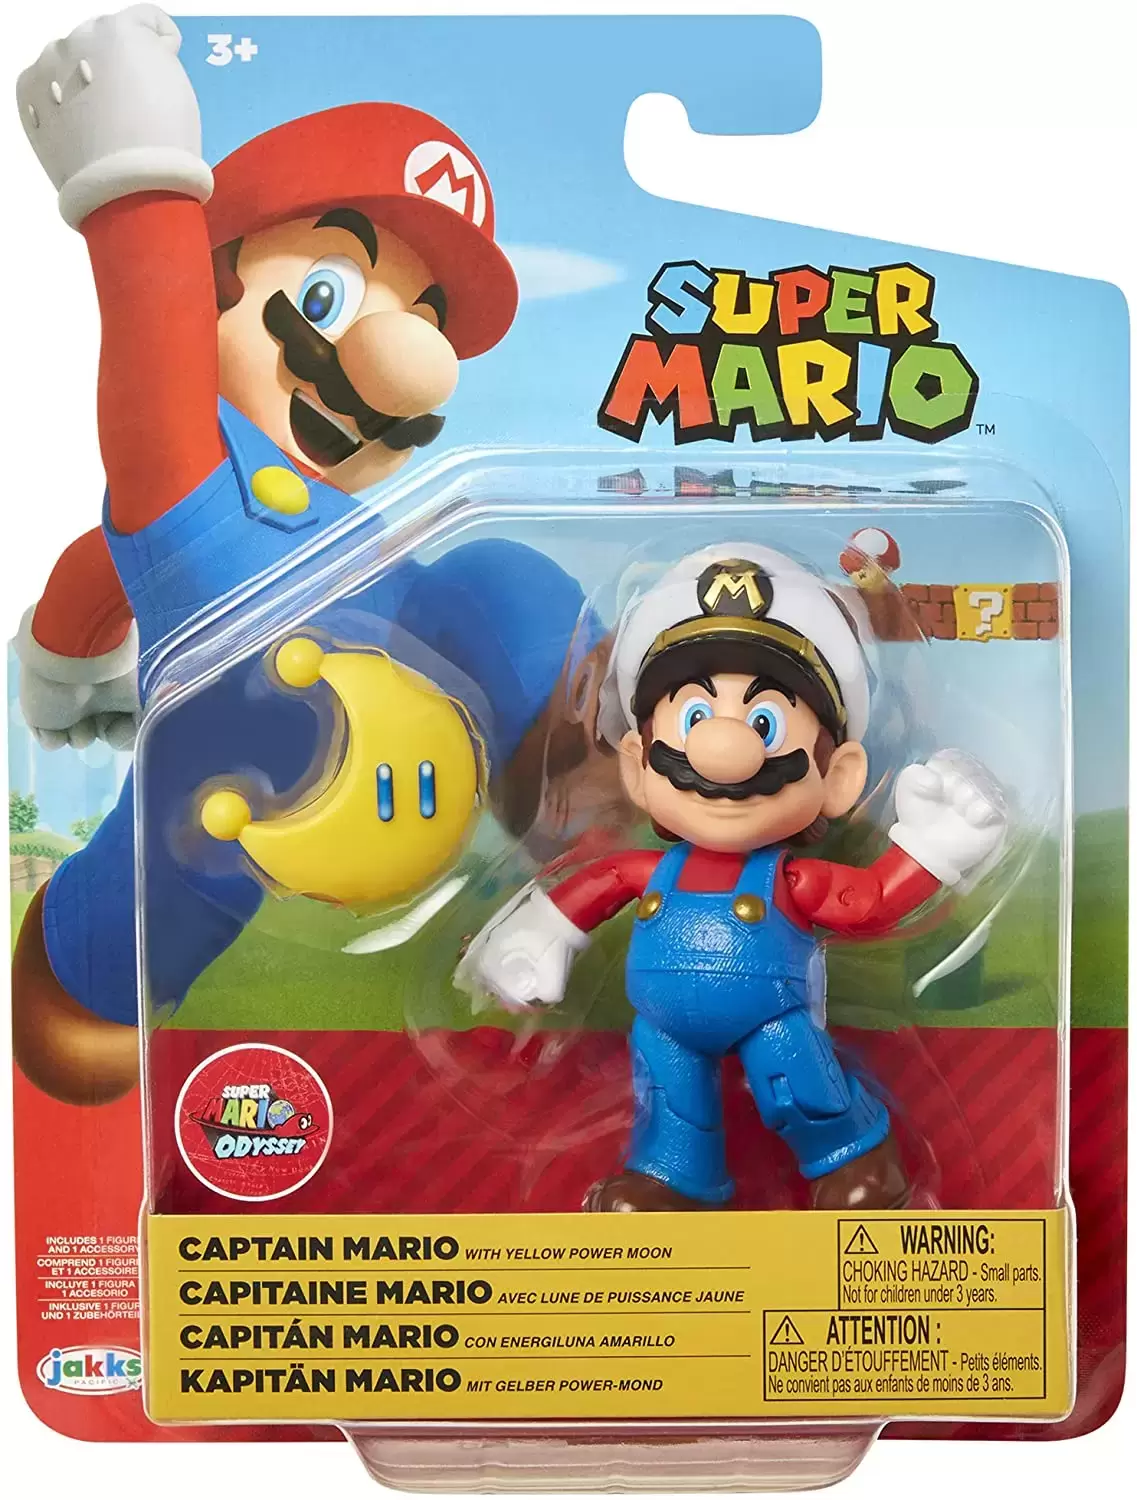 World of Nintendo - Captain Mario with Yellow Power Moon